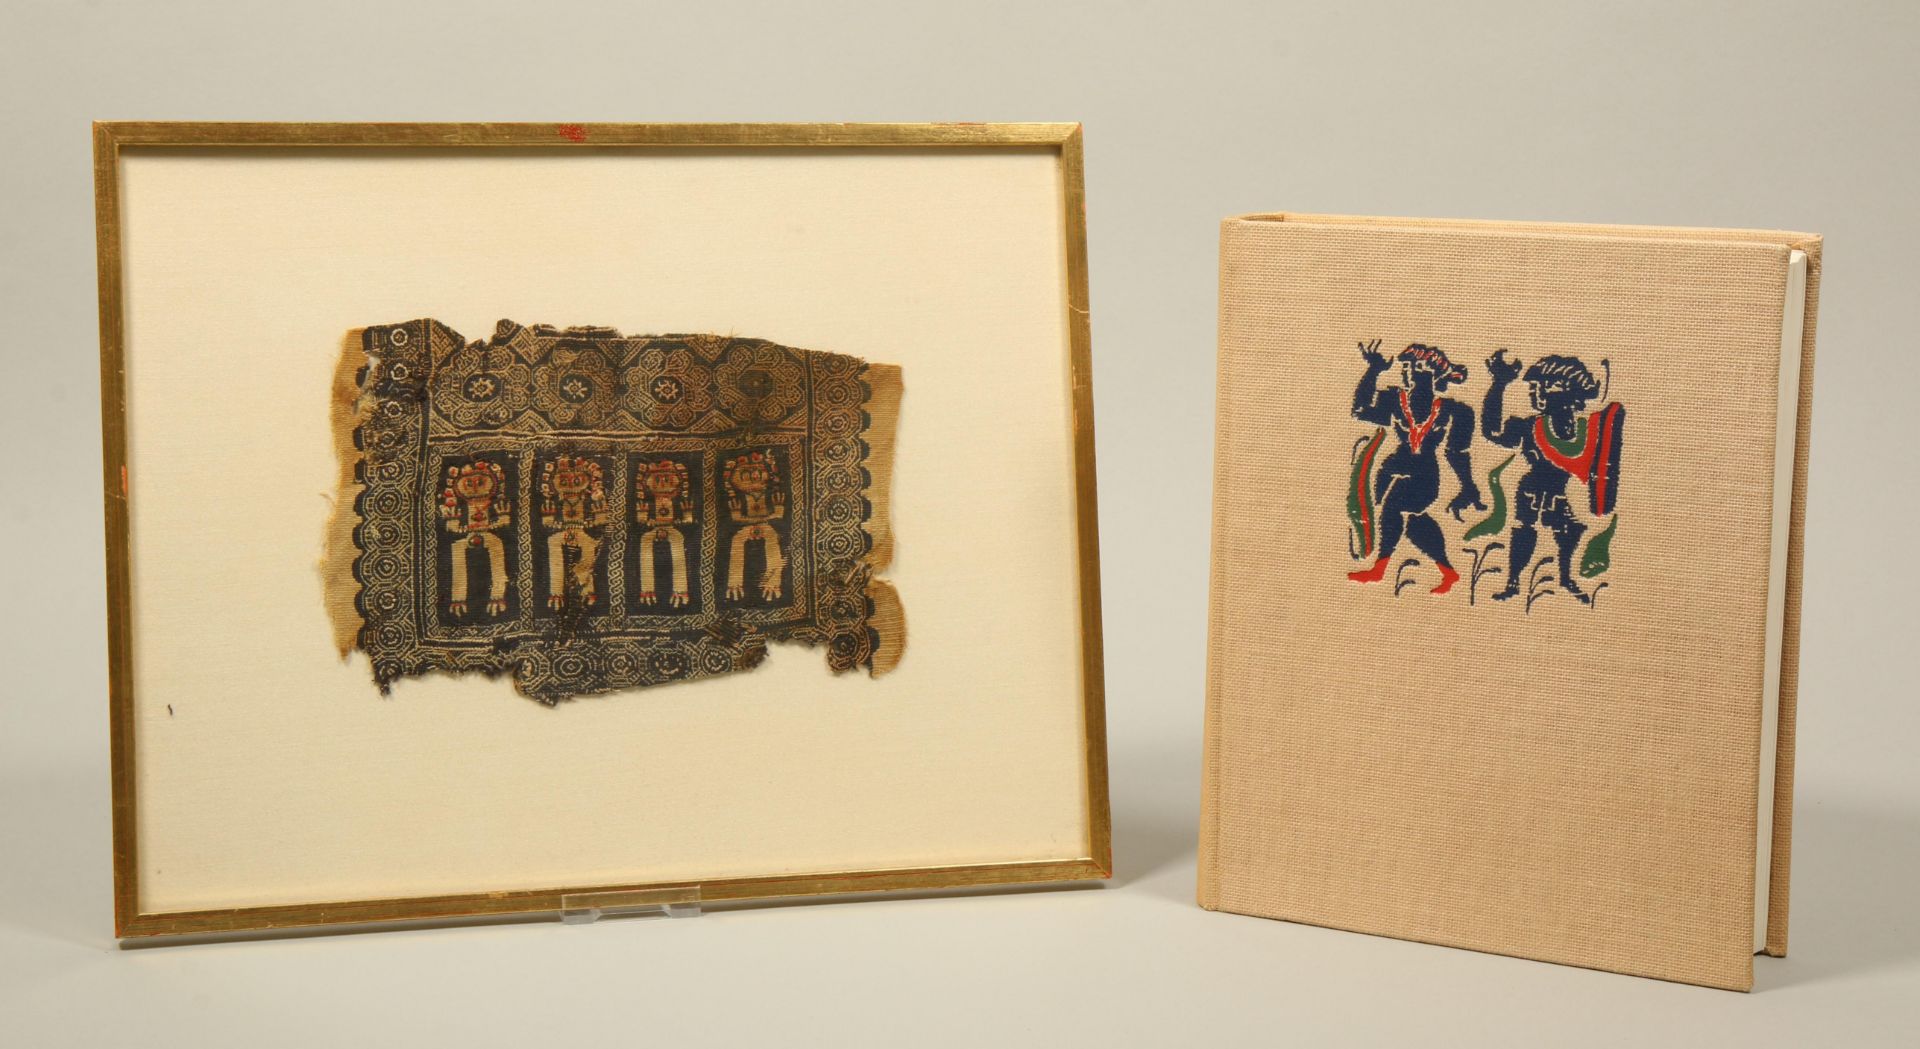 Egypt, Coptic textile fragment of three anthropomorphic figures